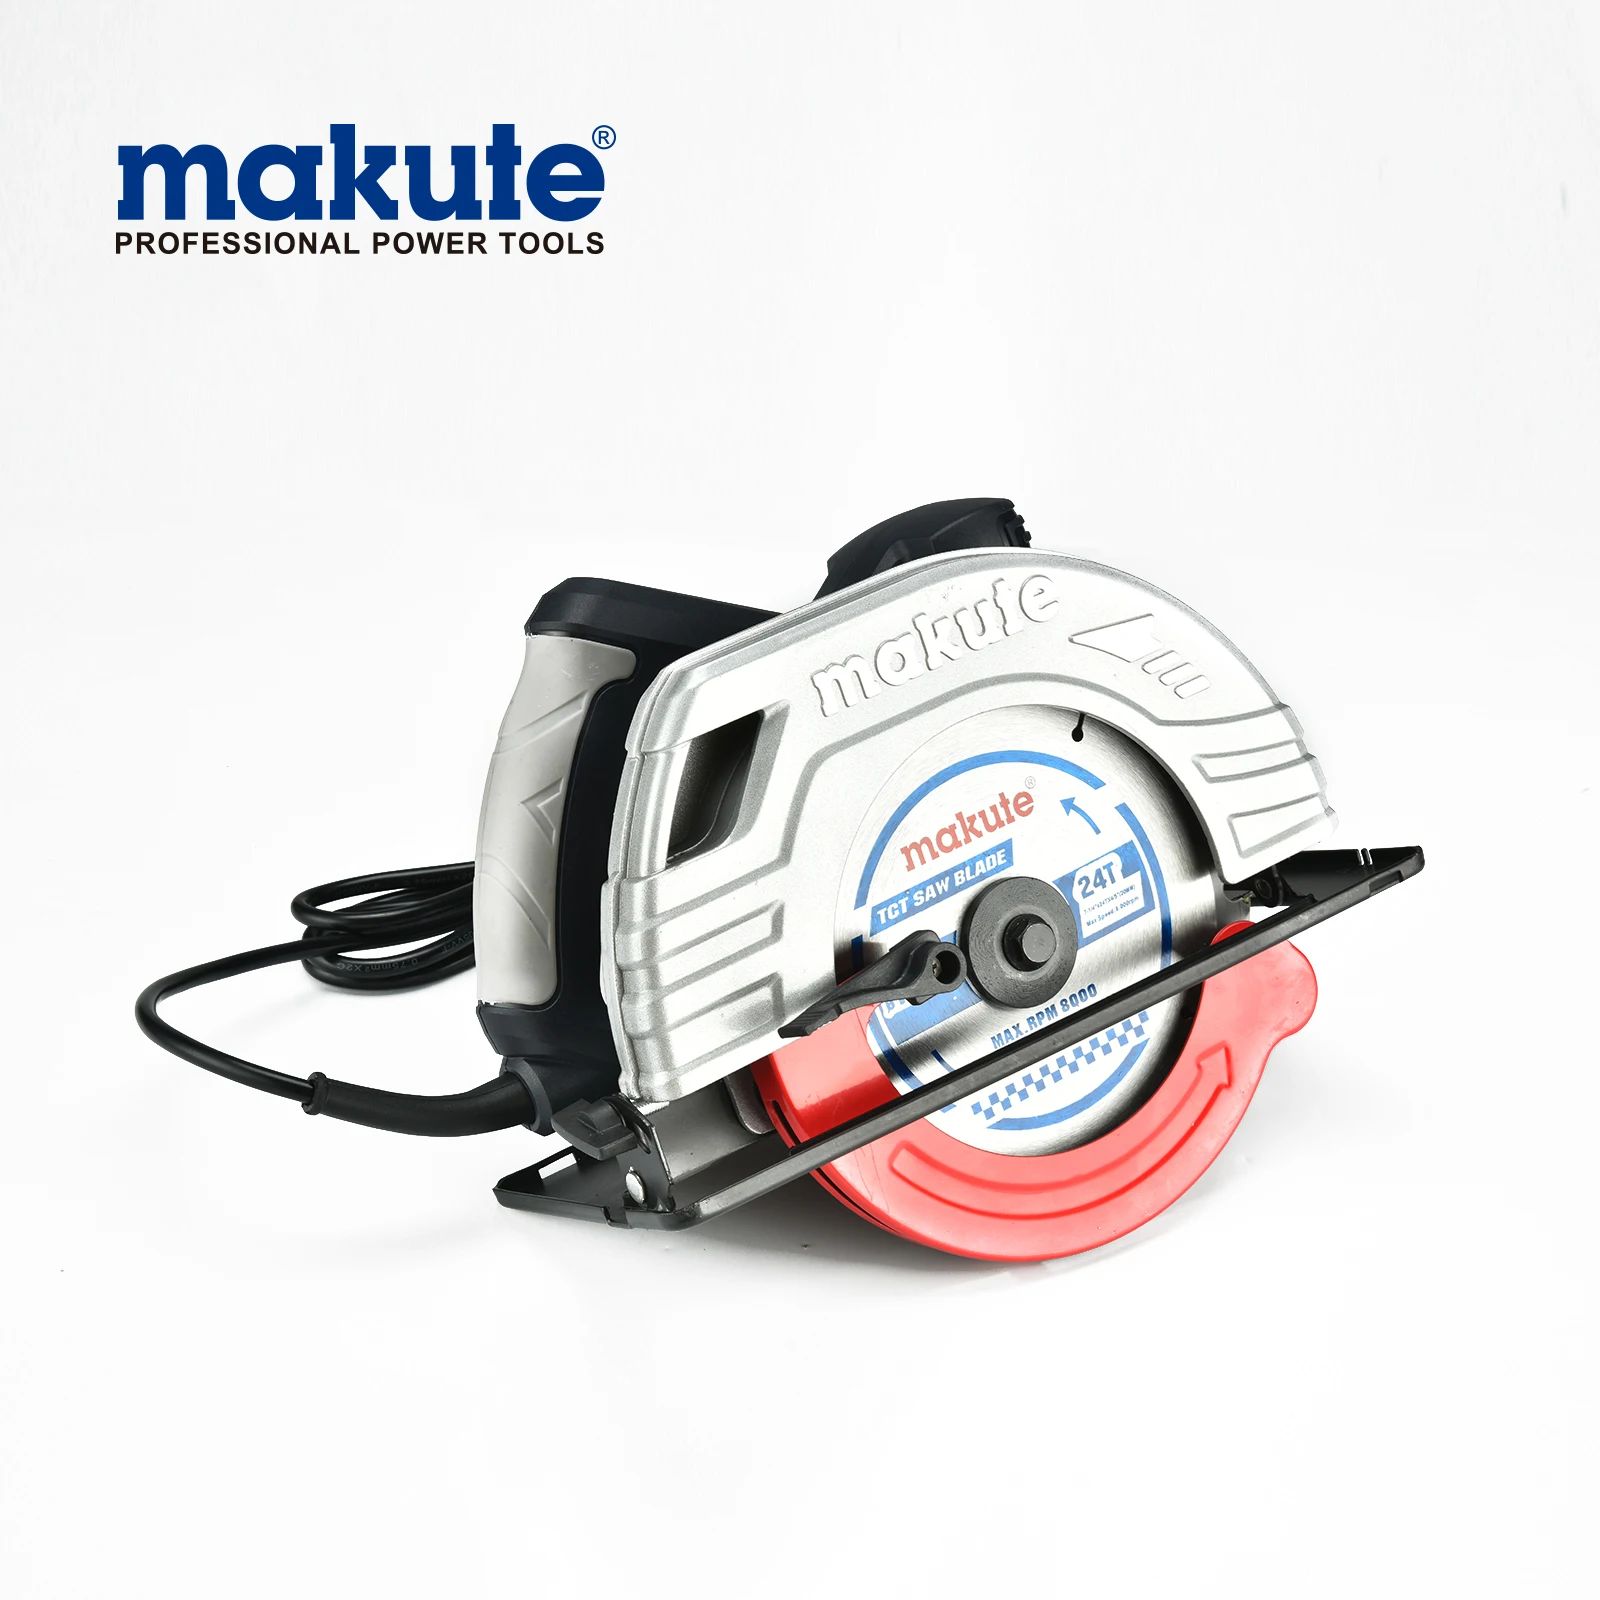 Makute electric circular saw machine CS003 185mm Circular Saw